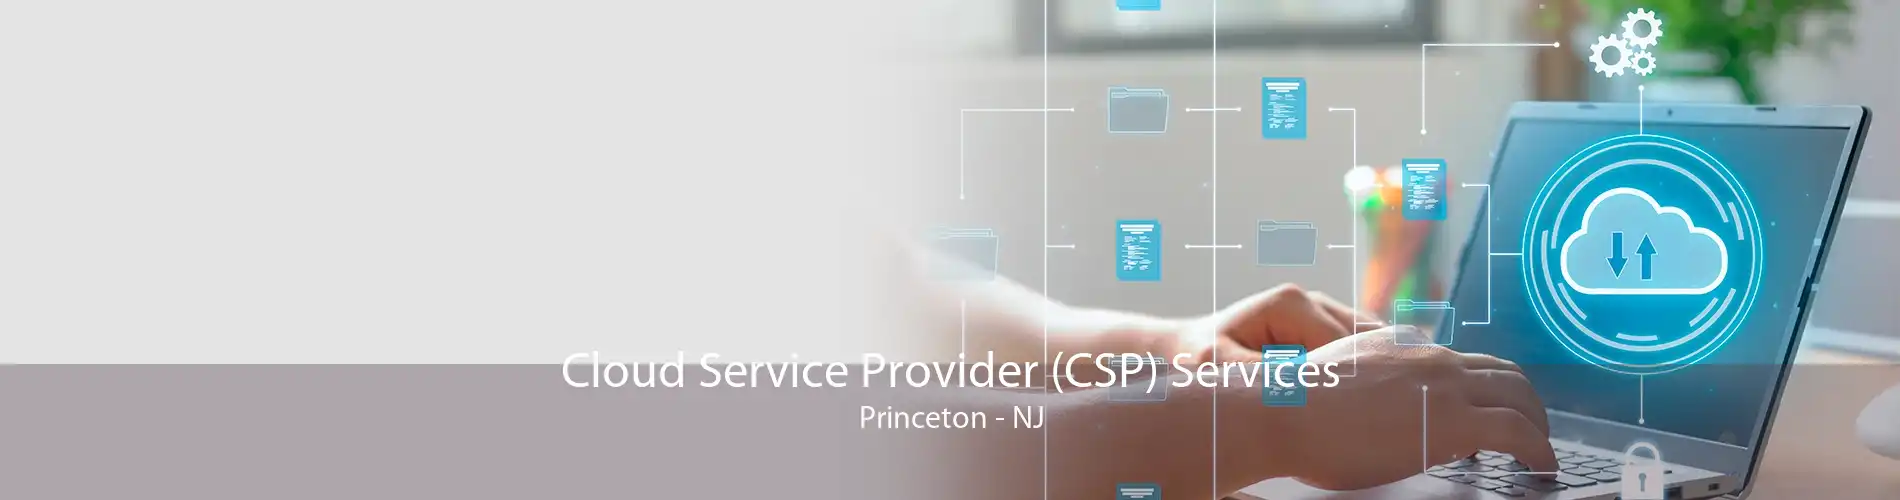 Cloud Service Provider (CSP) Services Princeton - NJ